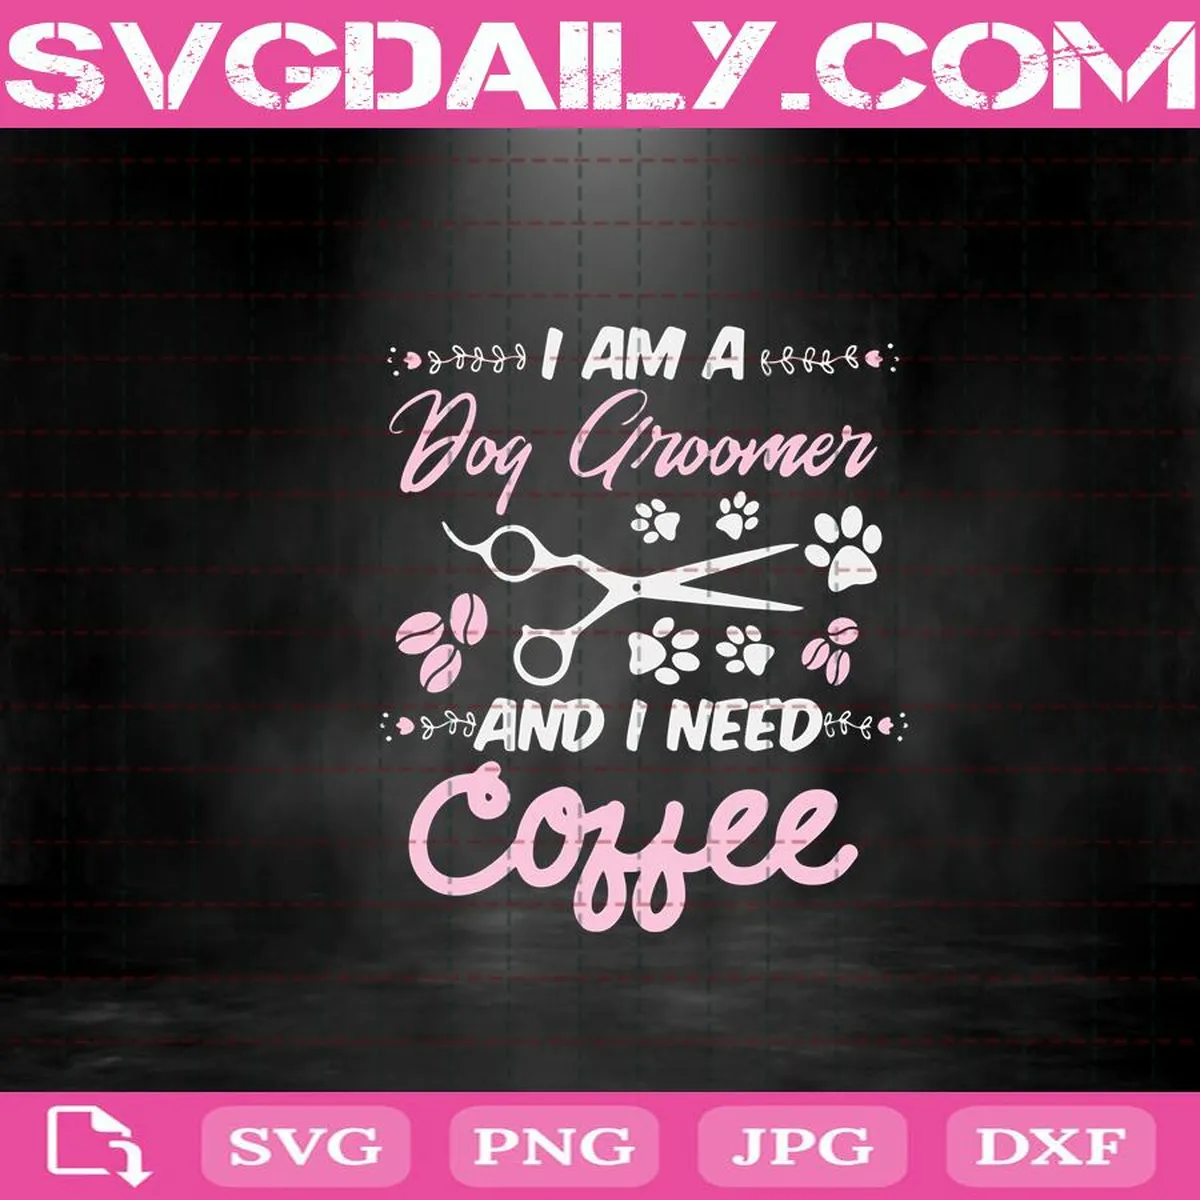 I Am A Dog Groomer And I Need Coffee Svg, Trending Svg, Dog Groomer Svg, Coffee Svg, Dog Svg, Dog Lovers Svg, Dog Gifts Svg, Coffee Lovers Svg